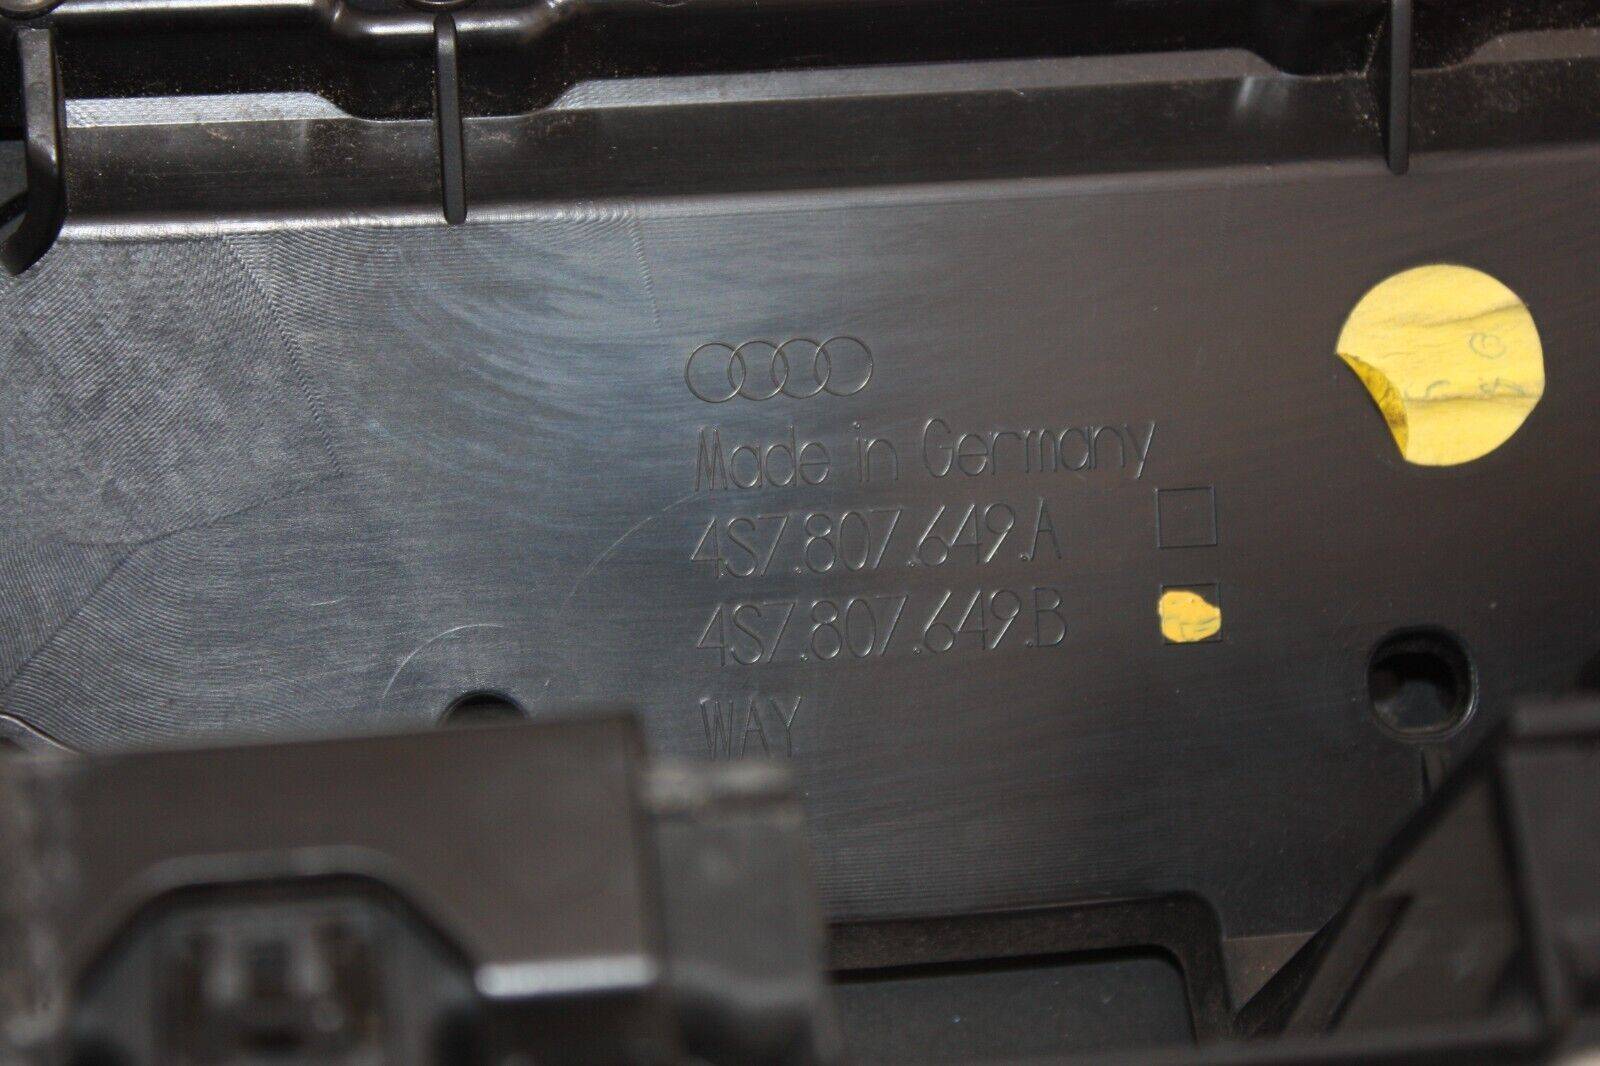 Audi-R8-Spyder-Engine-Deck-Boot-Lid-Tailgate-Spoiler-4S7807649a-175659278114-8